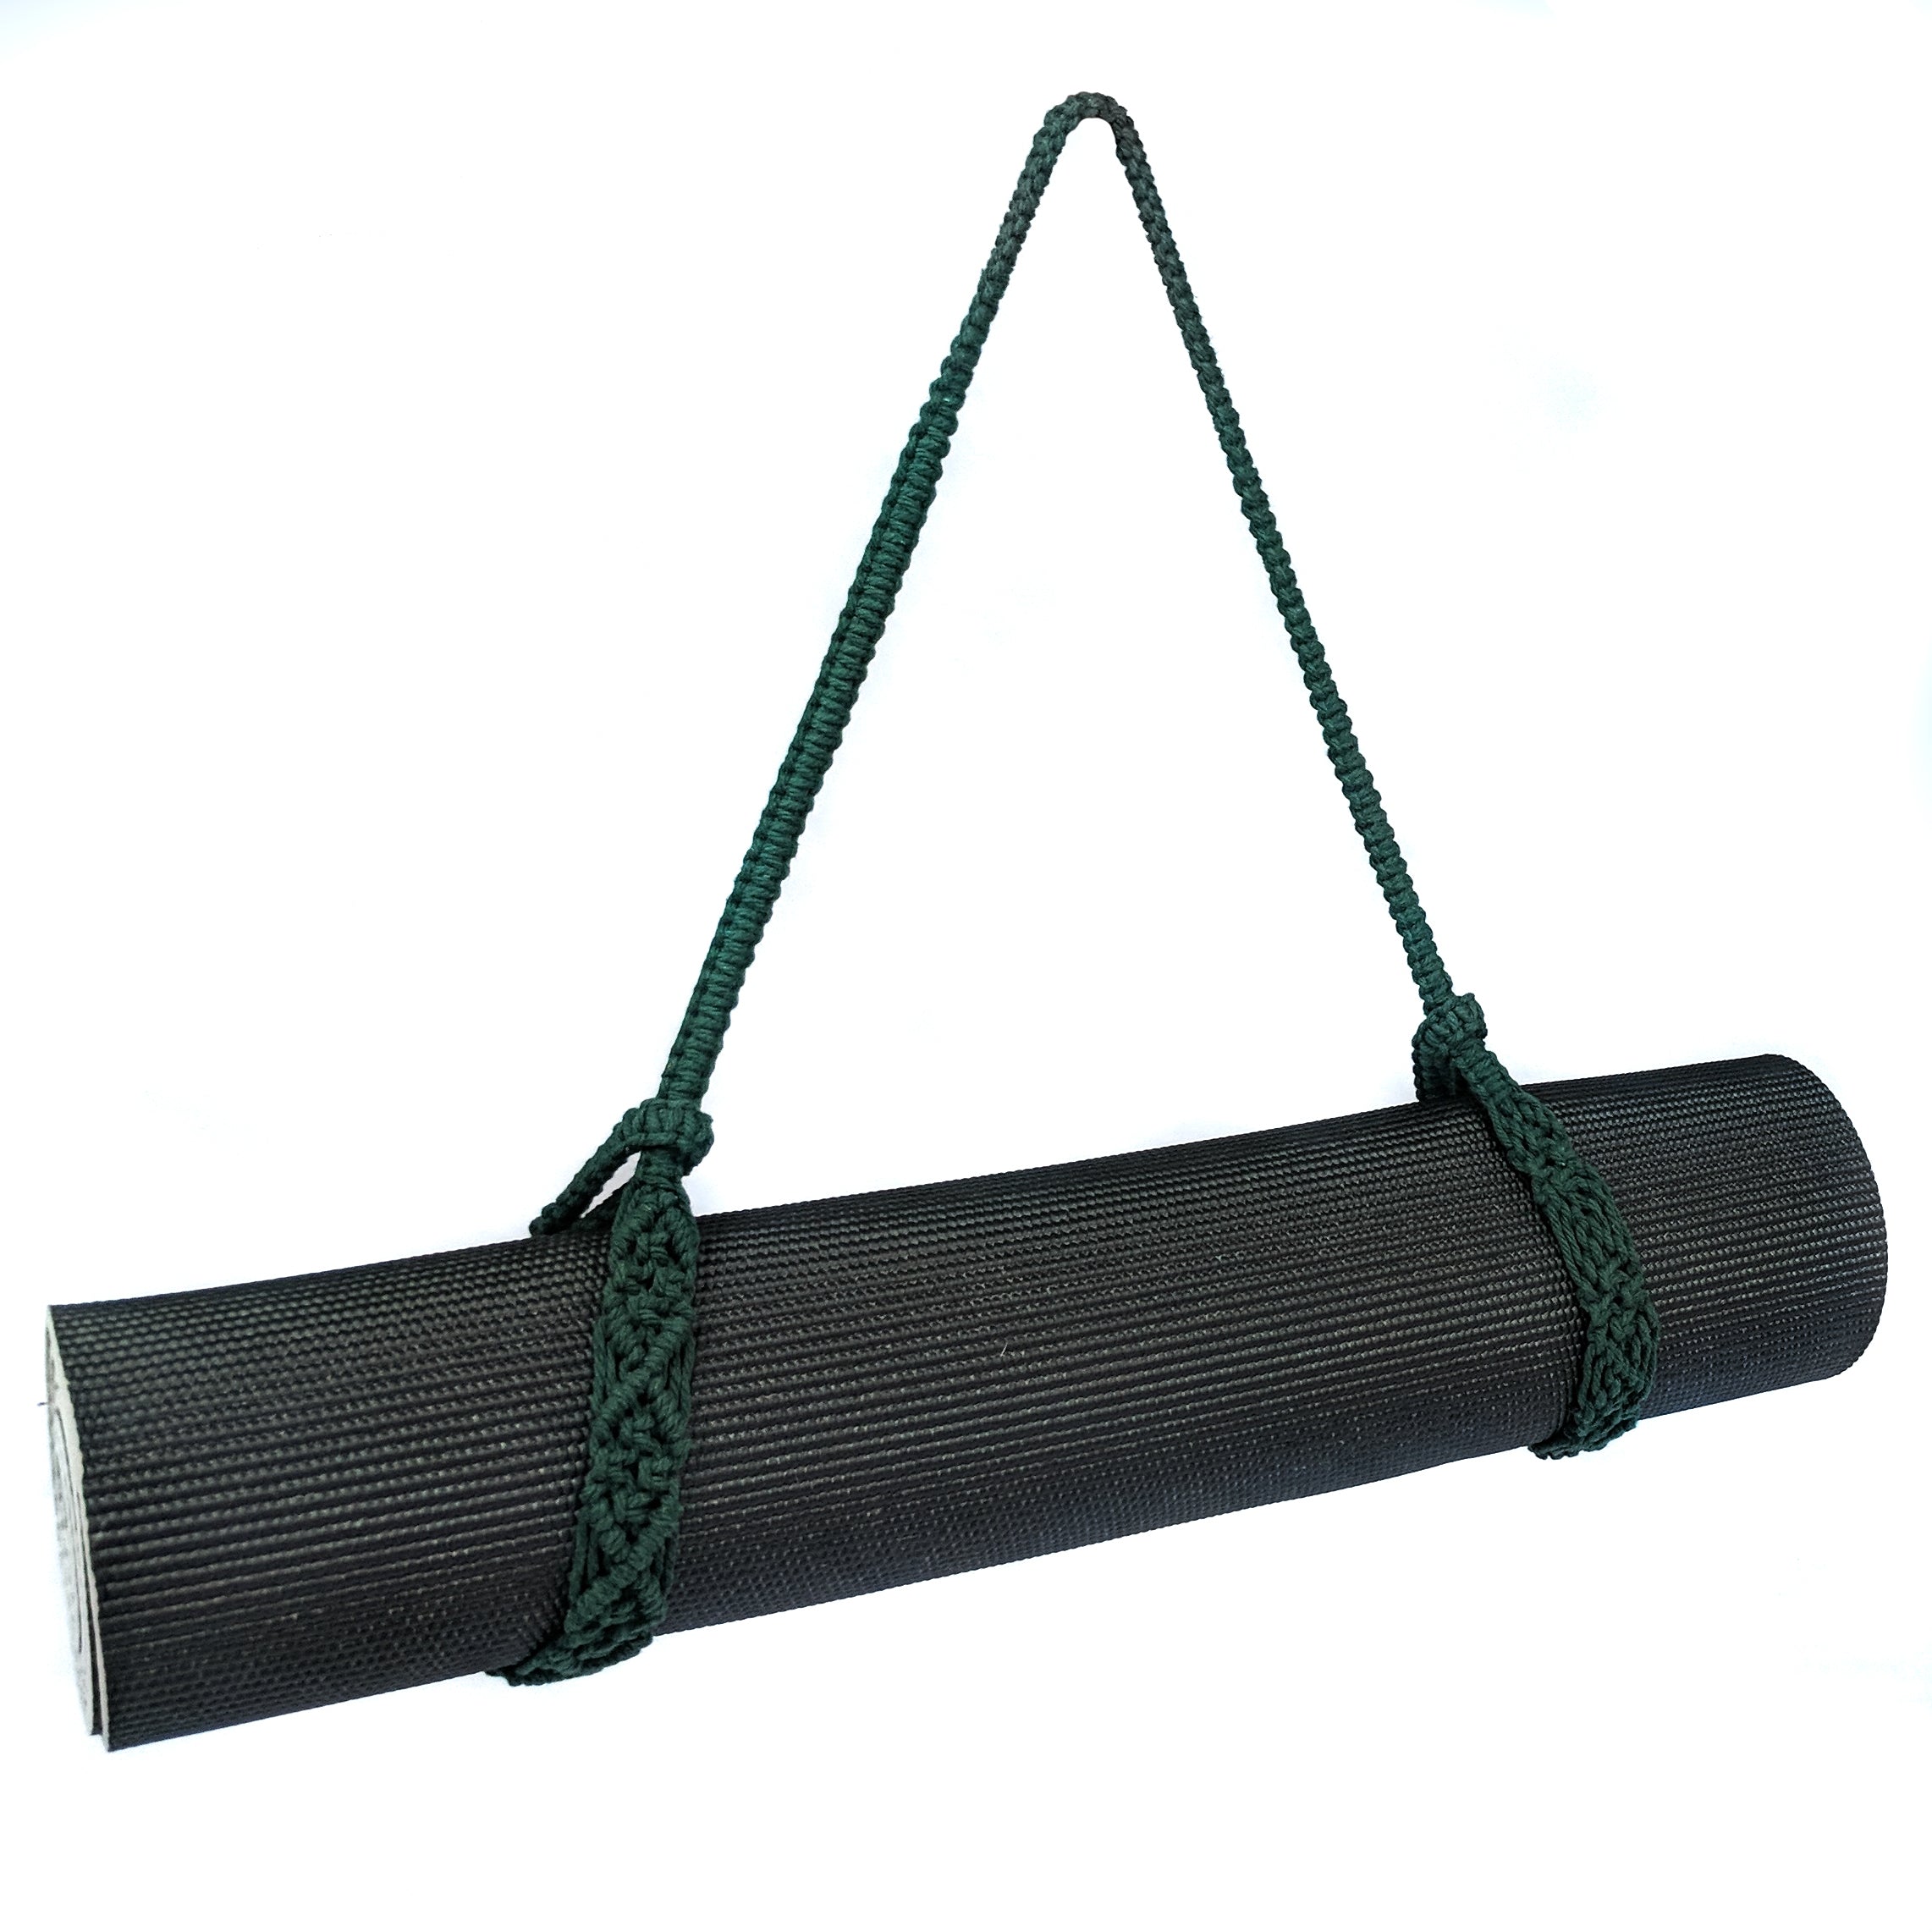  laddawan Macrame Yoga Mat Strap Sling Eco-Friendly